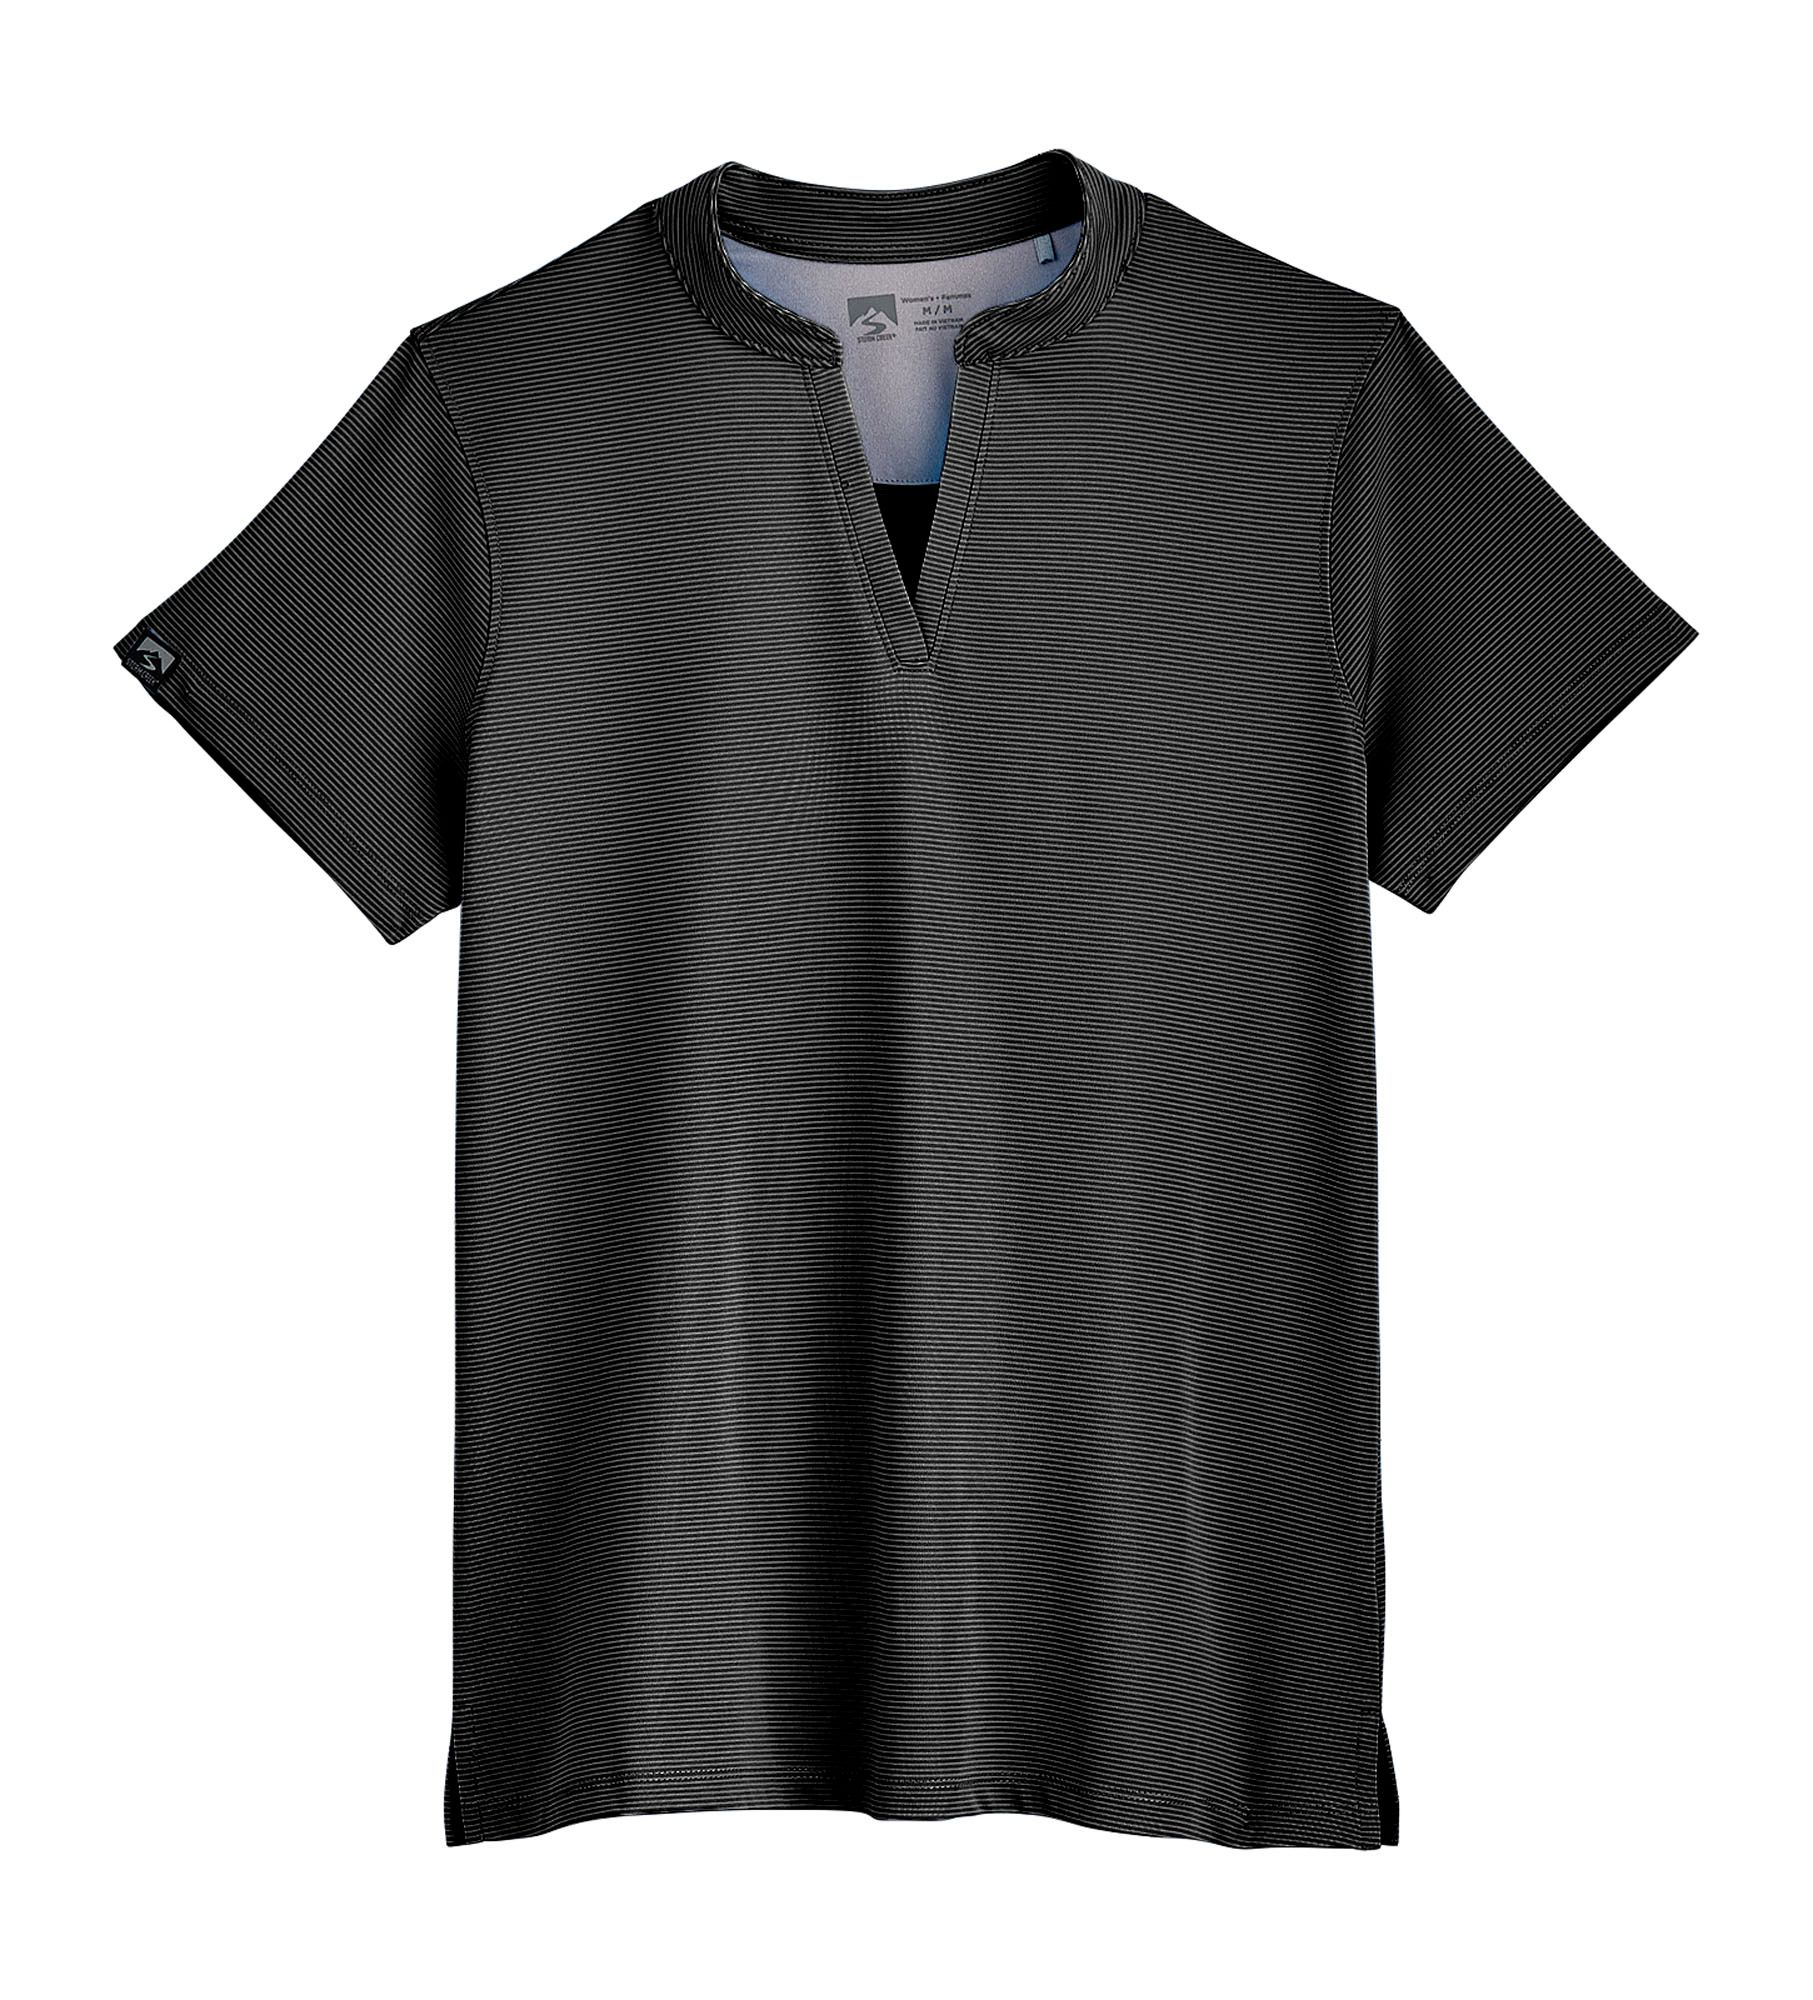 Storm Creek Optimist Short-Sleeve Polo Shirt for Ladies - Black - M